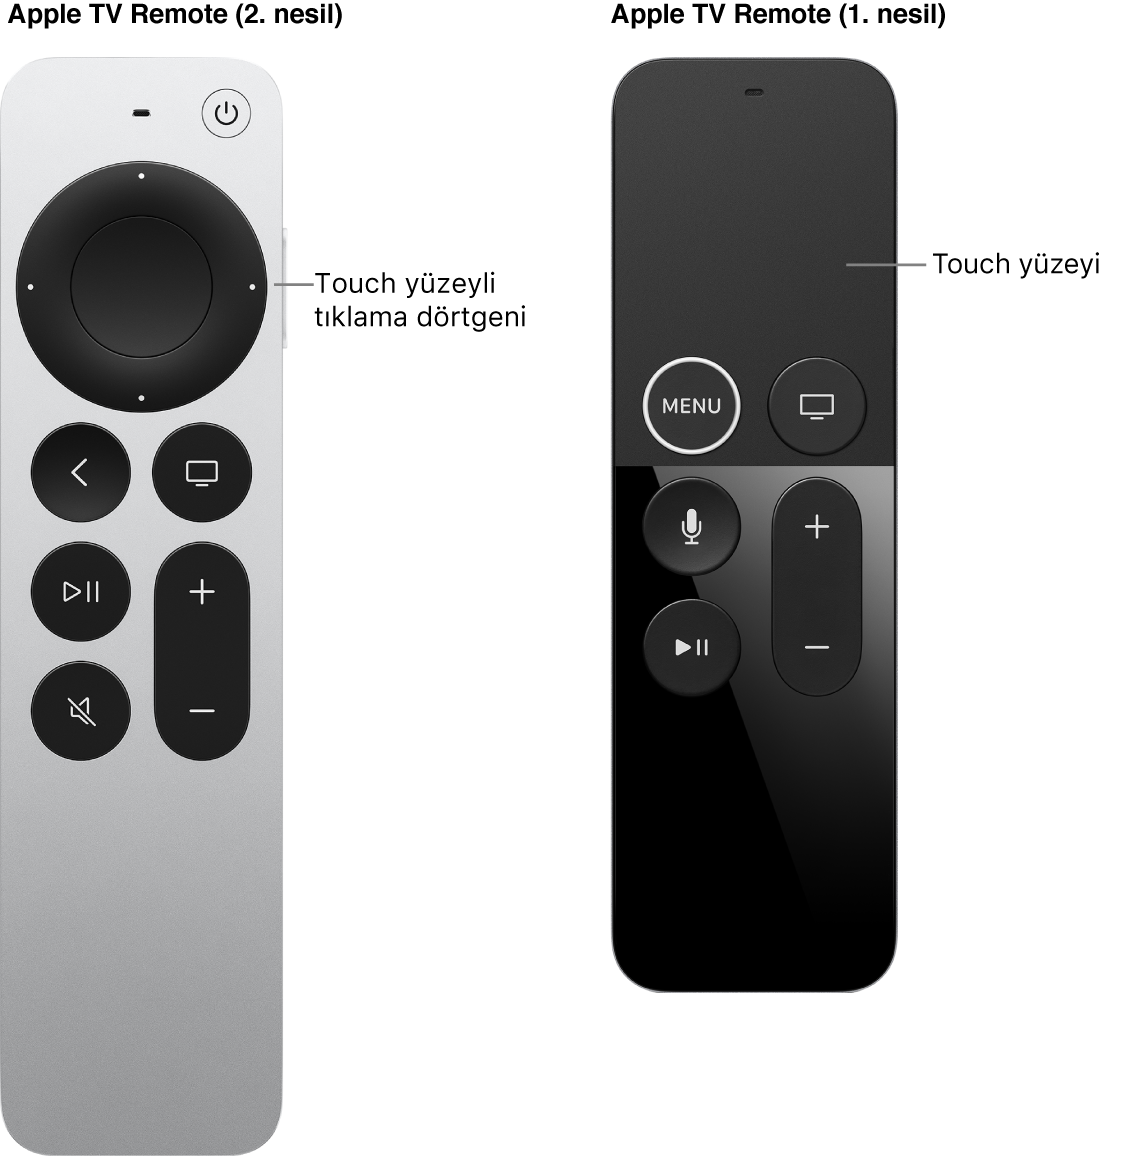 Tıklama dörtgenine sahip Apple TV Remote (2. ve 3. nesil) ve dokunma yüzeyine sahip Apple TV Remote (1. nesil)